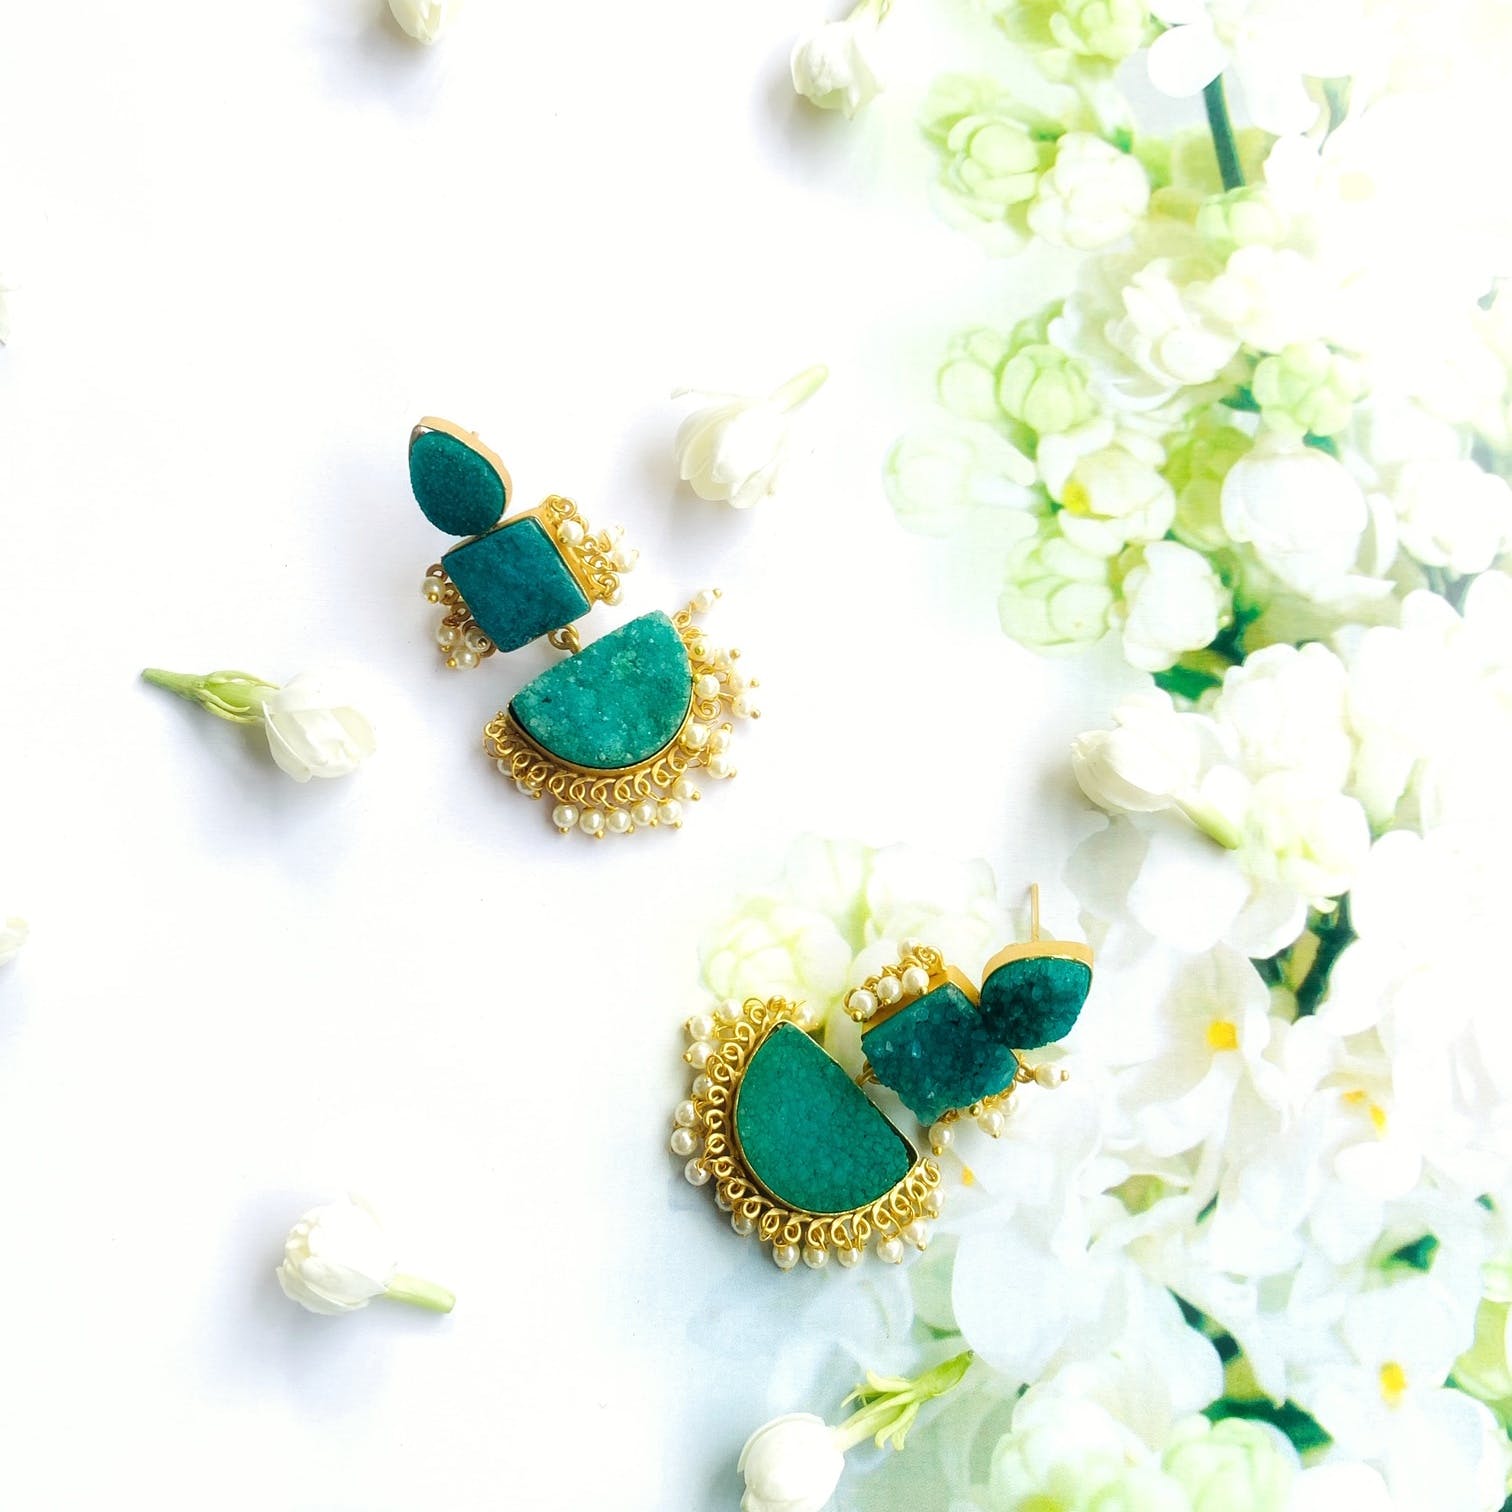 Green,Emerald,Fashion accessory,Body jewelry,Jewellery,Gemstone,Turquoise,Earrings